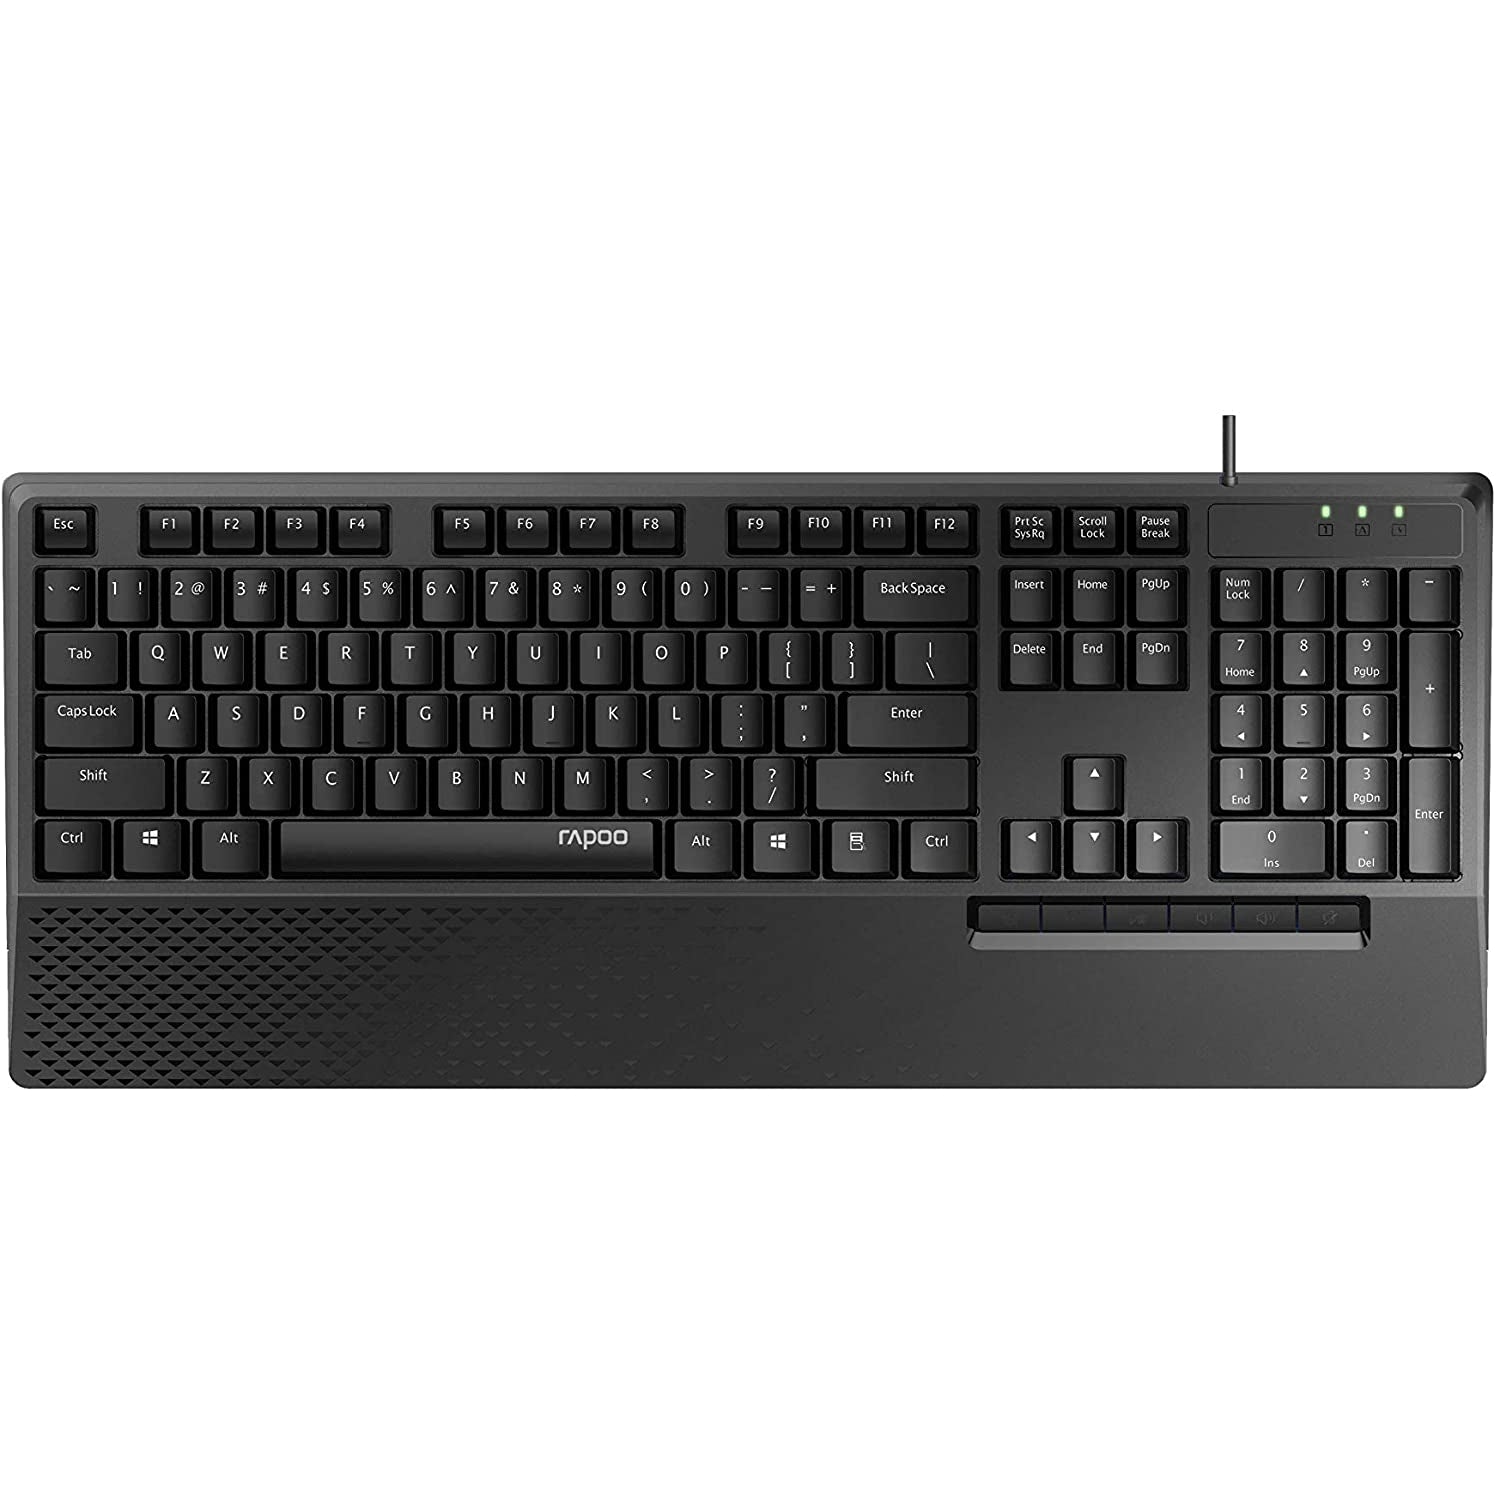 Rapoo NX2000 Wired Keyboard Mouse Desktop Combo Set, Black - Refurbished Pristine